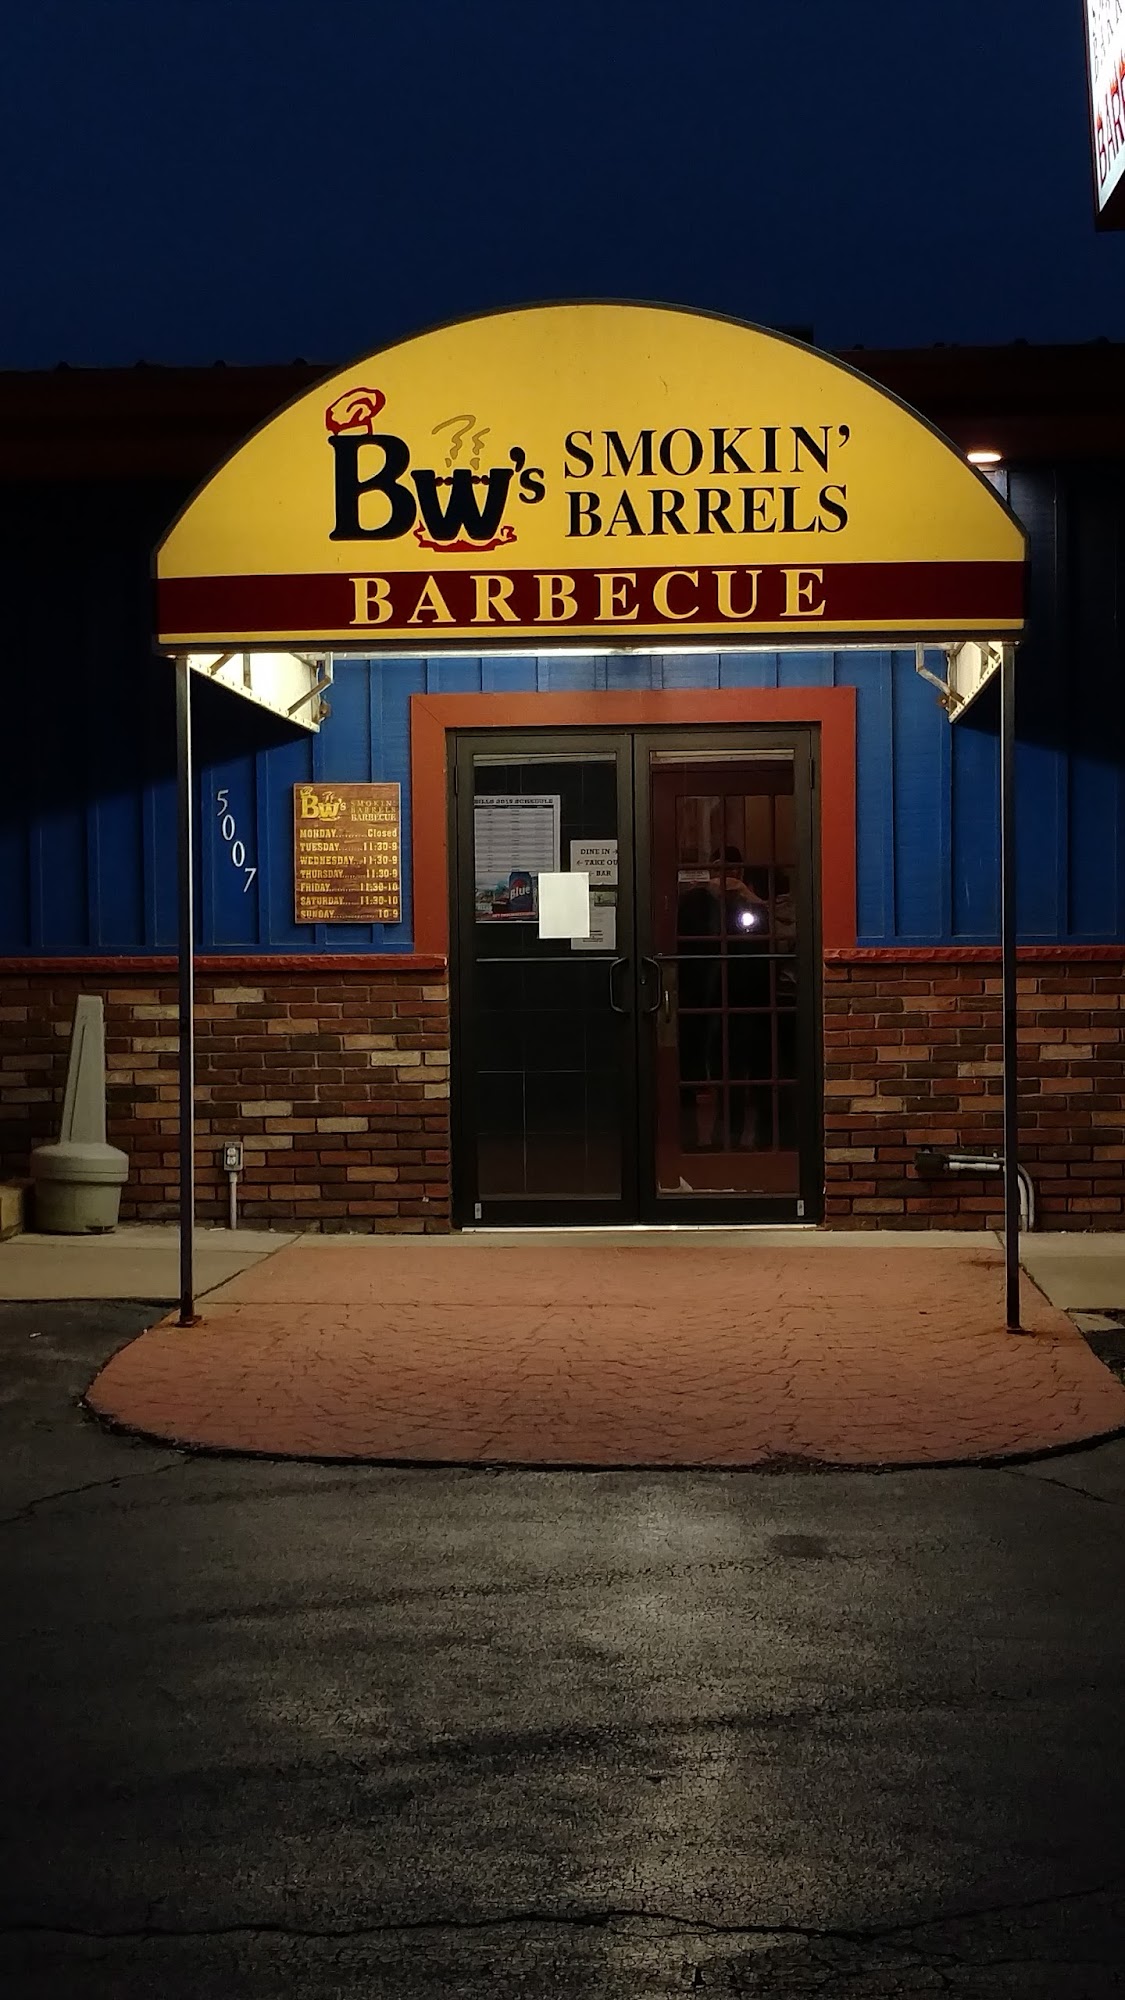 BW's Smokin' Barrels Barbecue